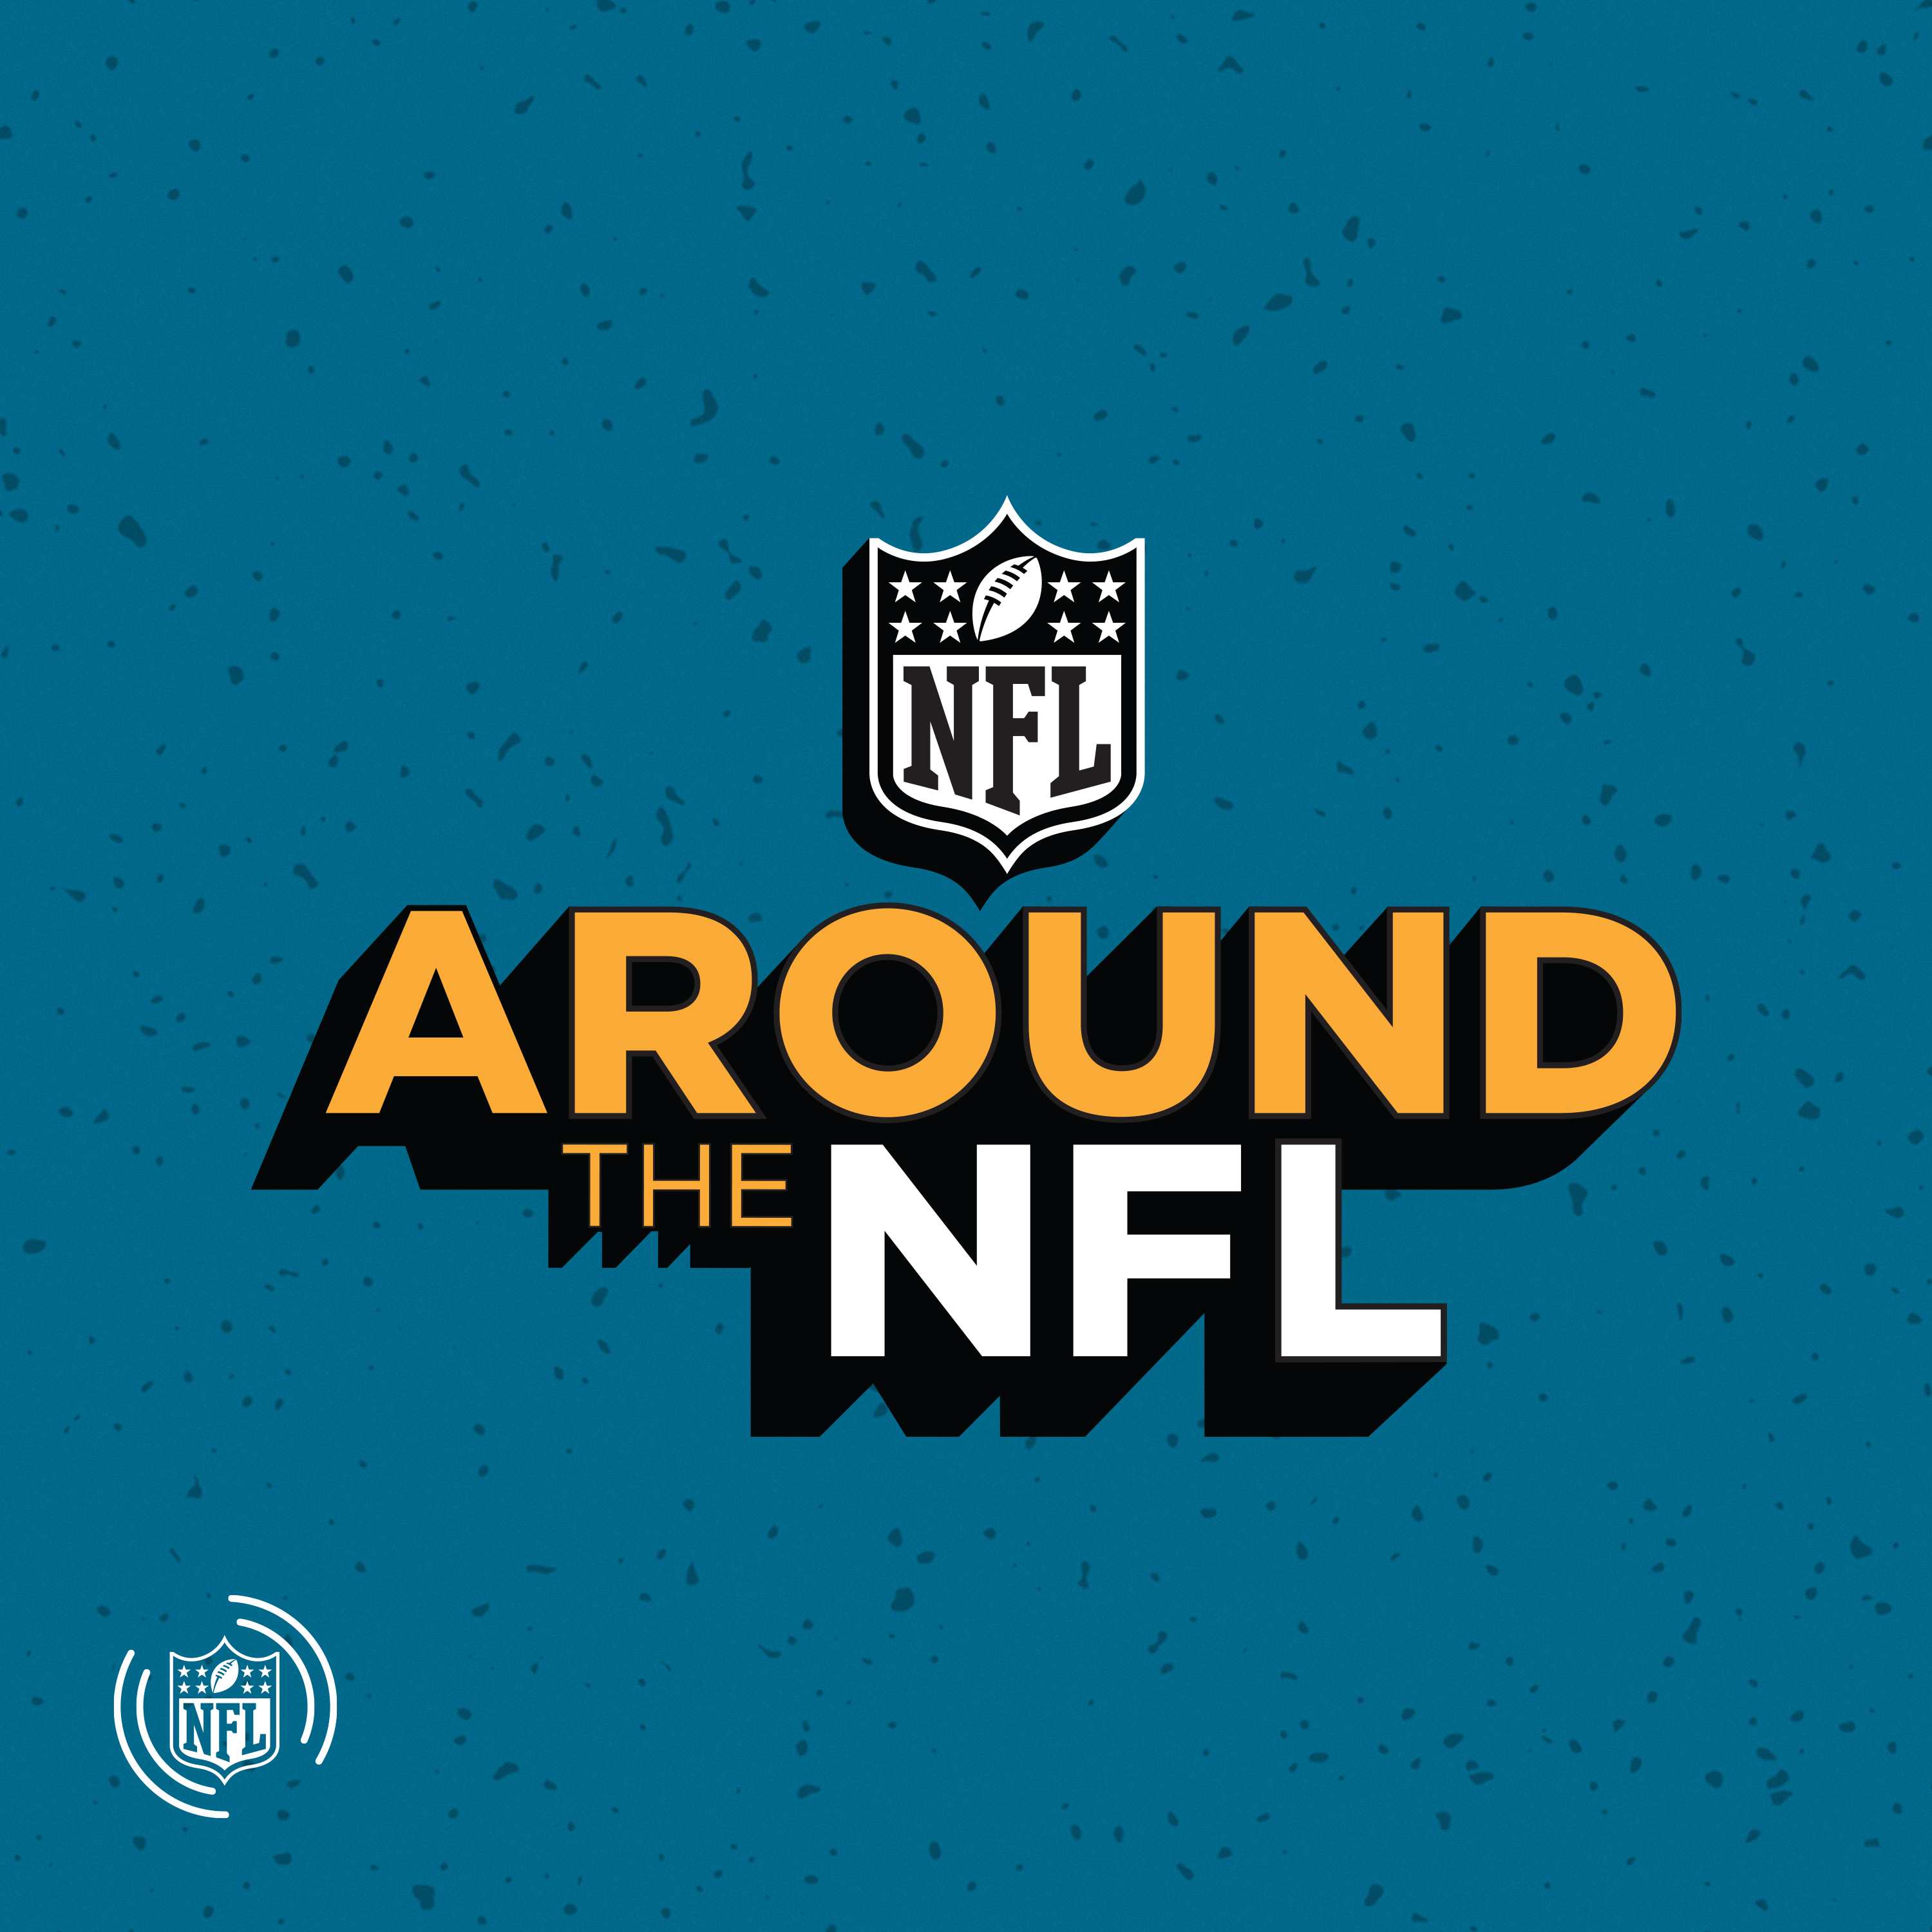 NFL ATL: Week 12 recap